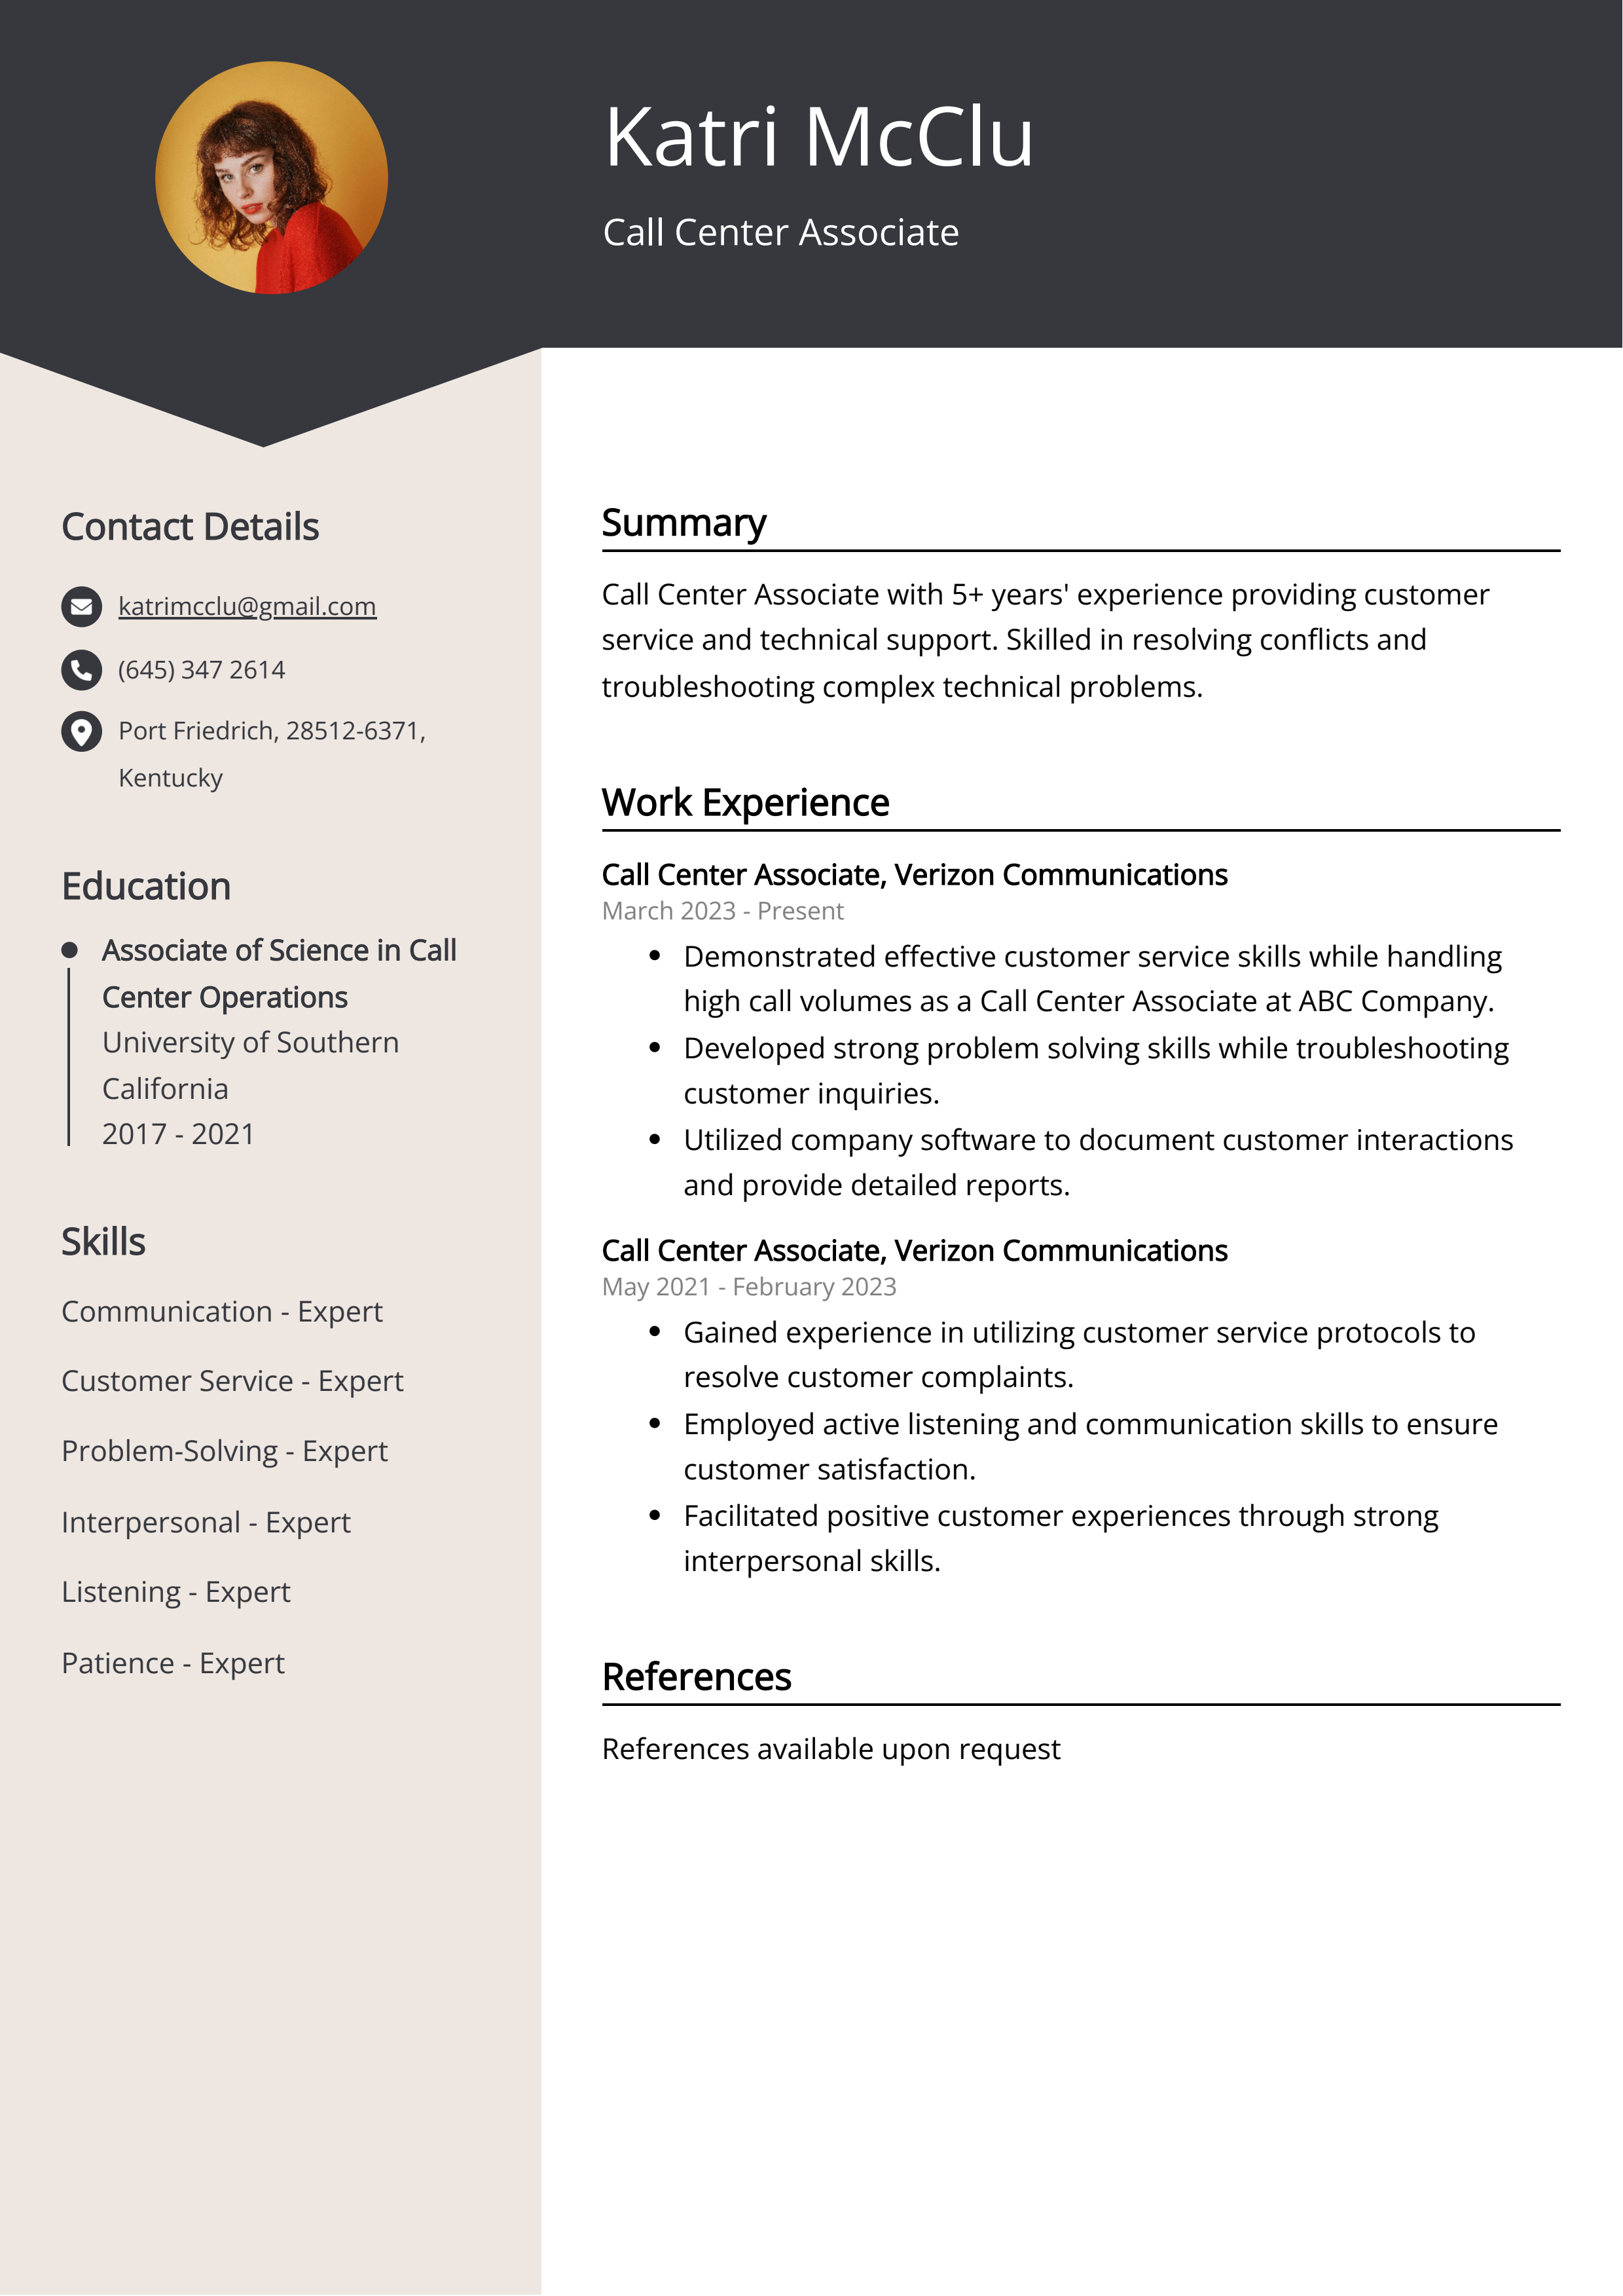 Call Center Associate CV Example